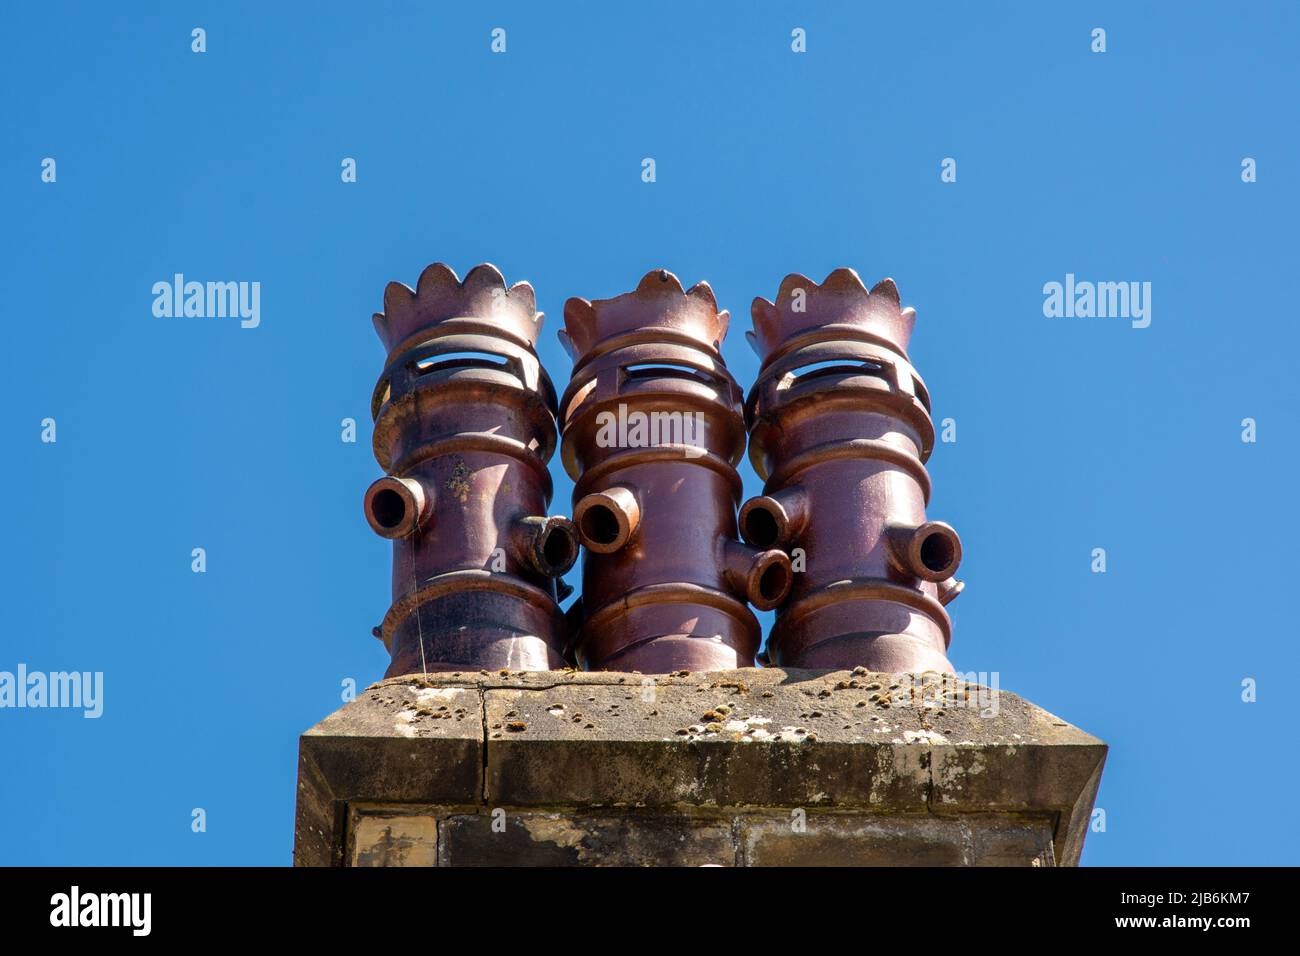 A trio of unique chimney pots against a blue sky Stock Photo